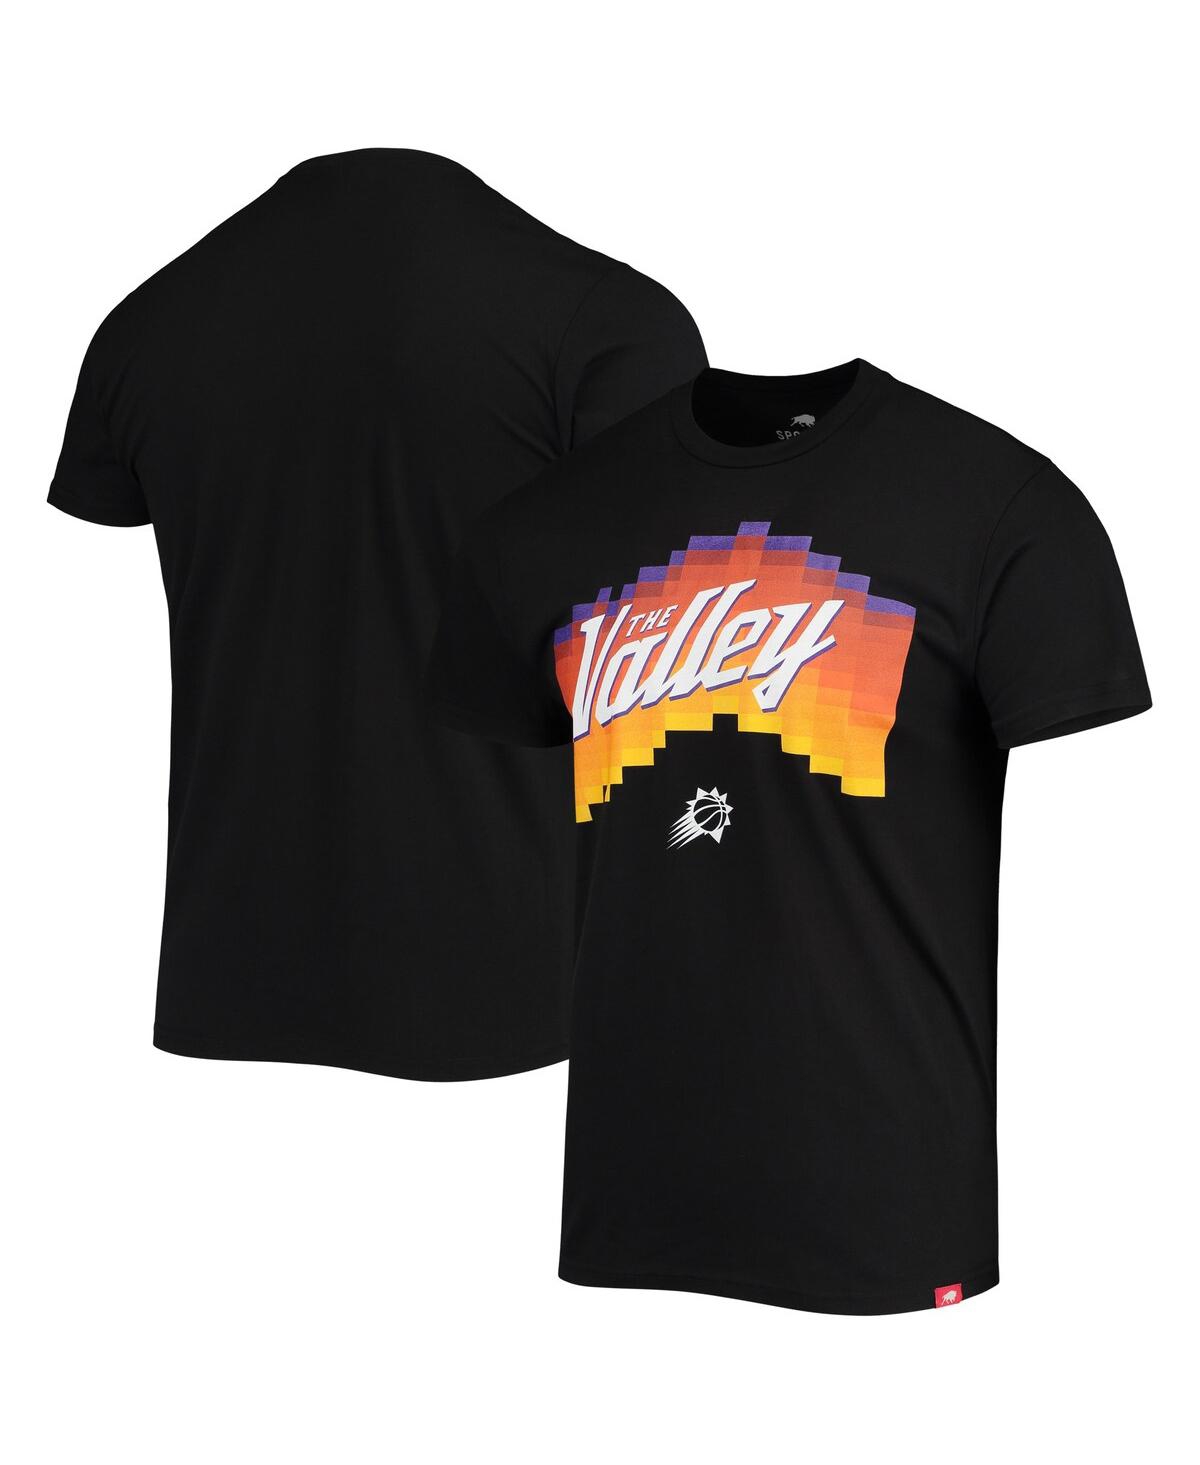 Men's Sportiqe Black Phoenix Suns The Valley Pixel City Edition Tri-Blend T-shirt - Black